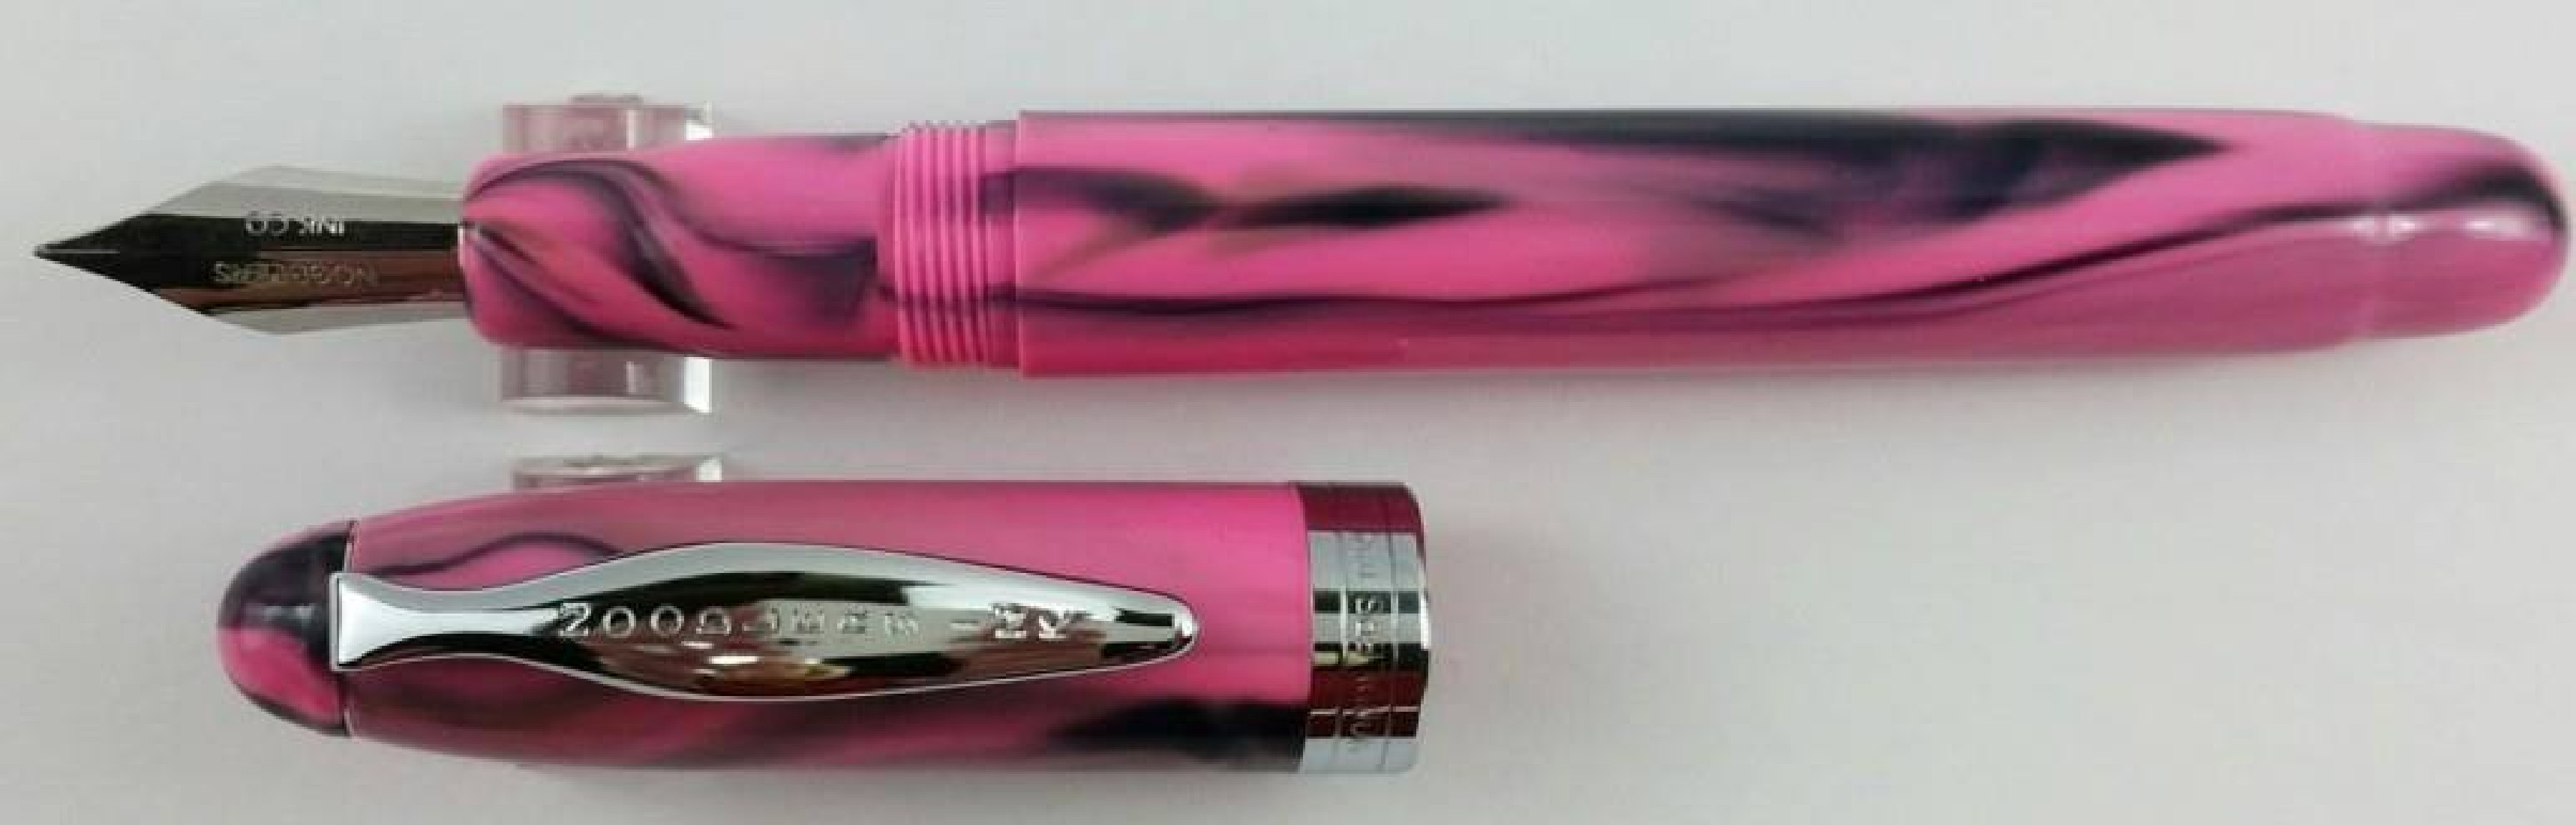 Noodlers Charon*s Pink Ahab Flex 15037  Fountain Pen